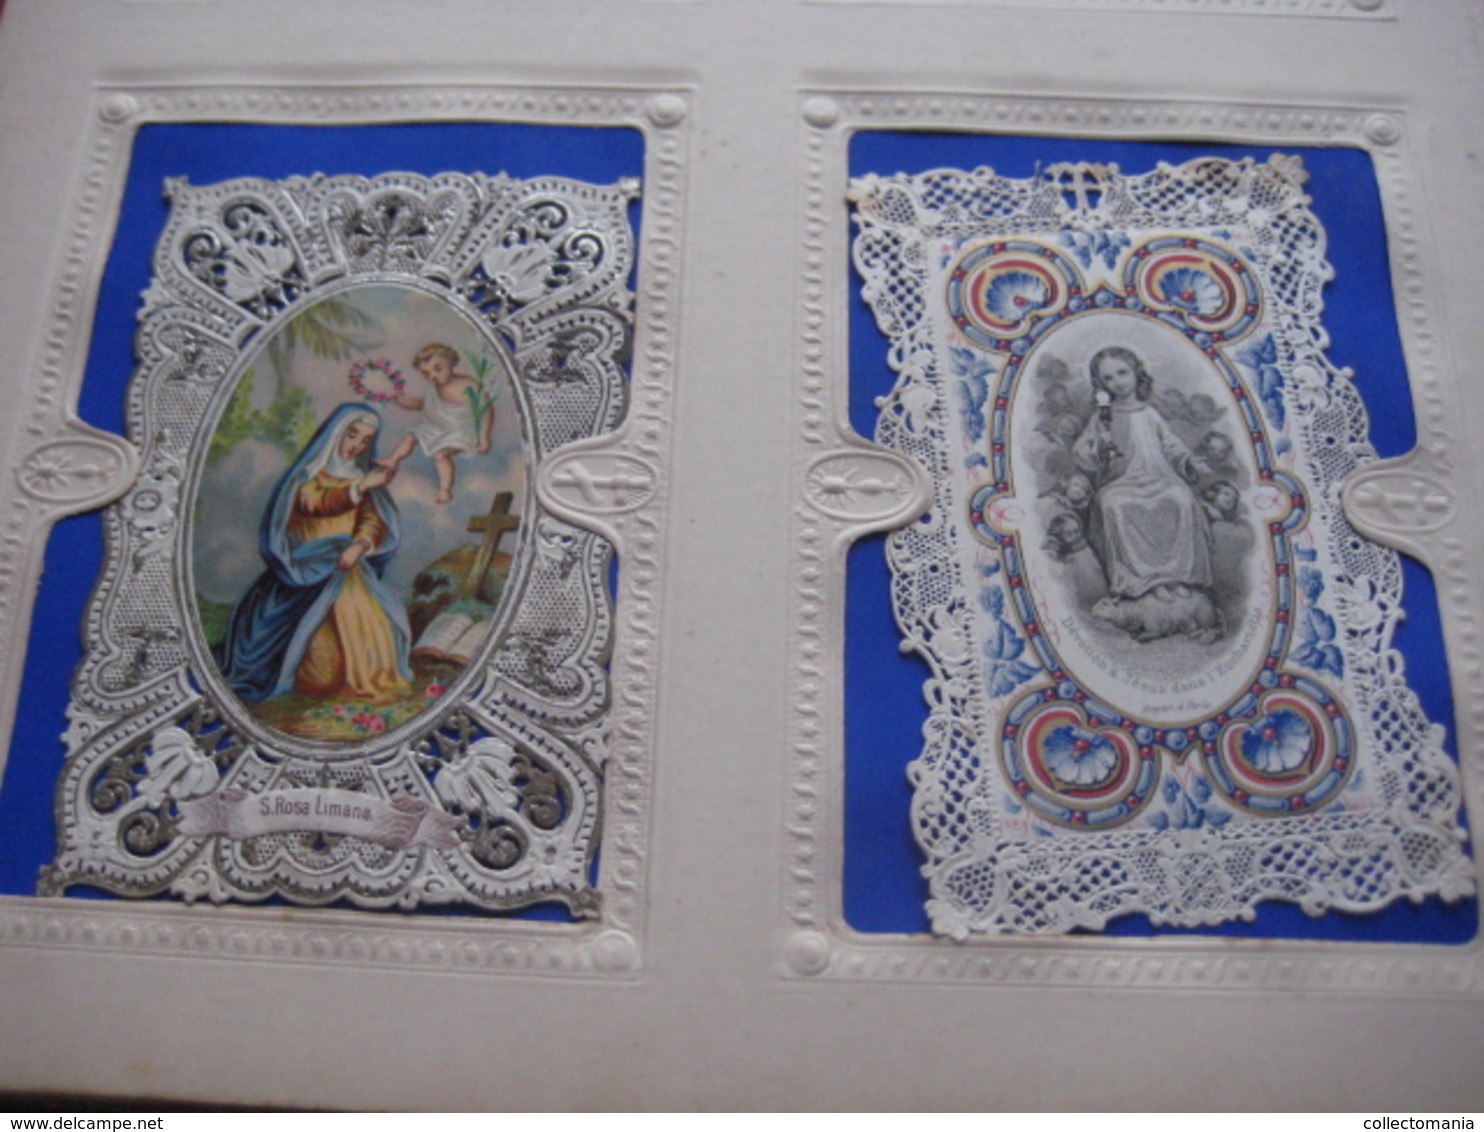 96 HOLY cards,  cartes litho, gravures, relief, mecanic : Saints ( heiligen ) JESUS MARIA cartes pieuses Very Good RARE